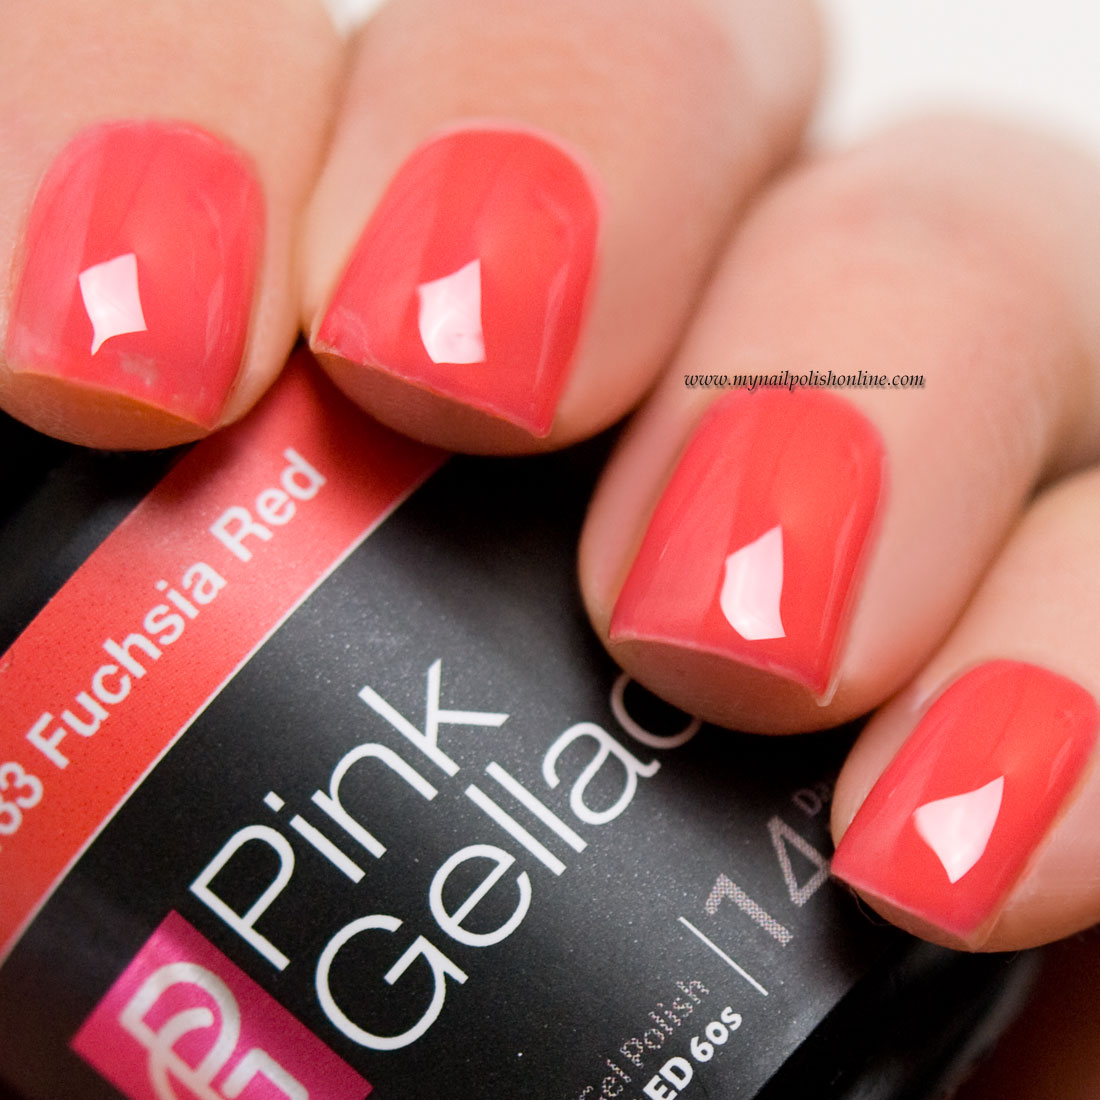 Pink Gellac - My Nail Polish Online